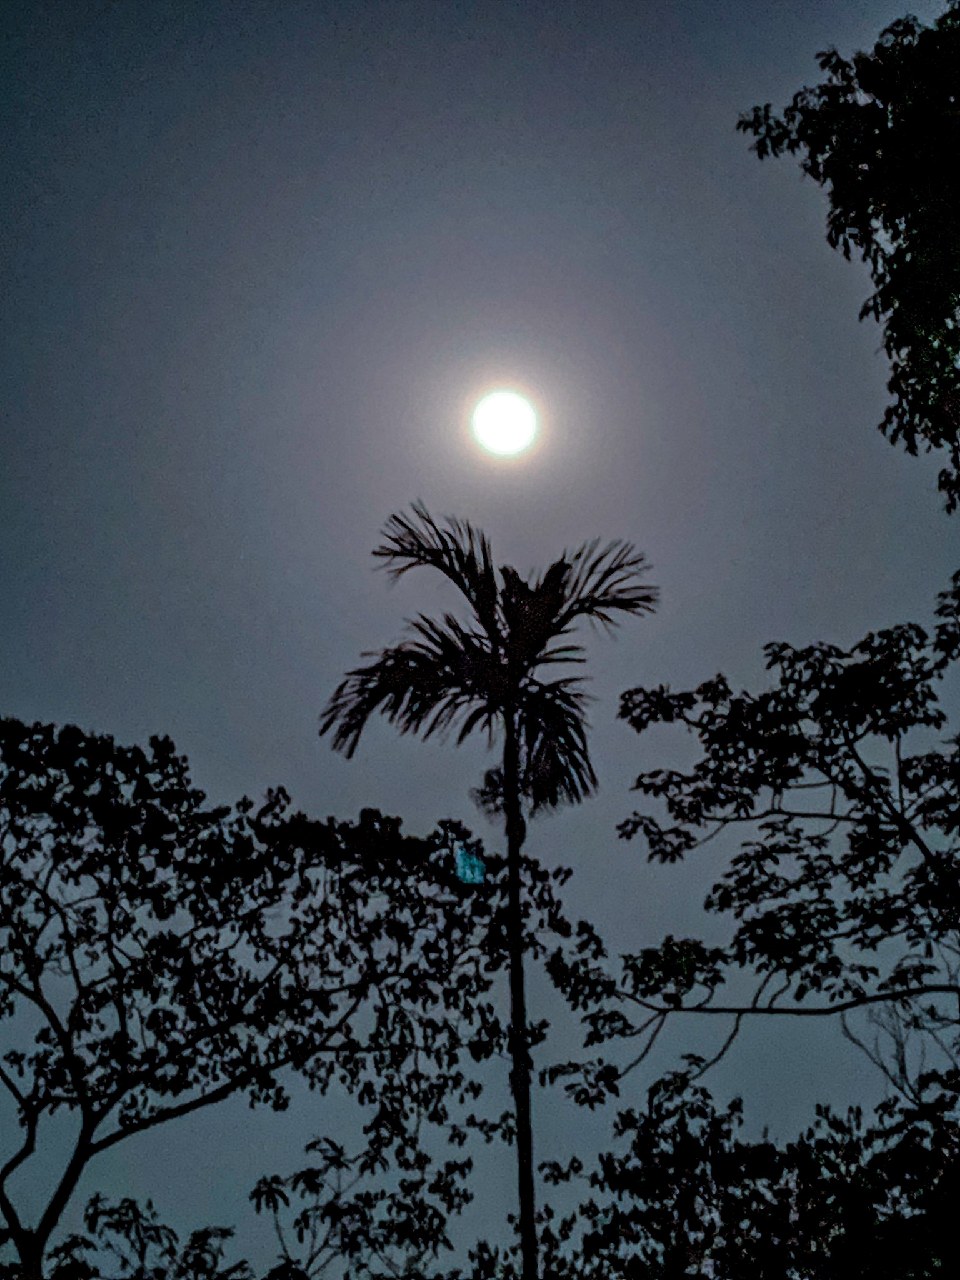 night moon by redmi7 - Photography - Xiaomi Community - Xiaomi